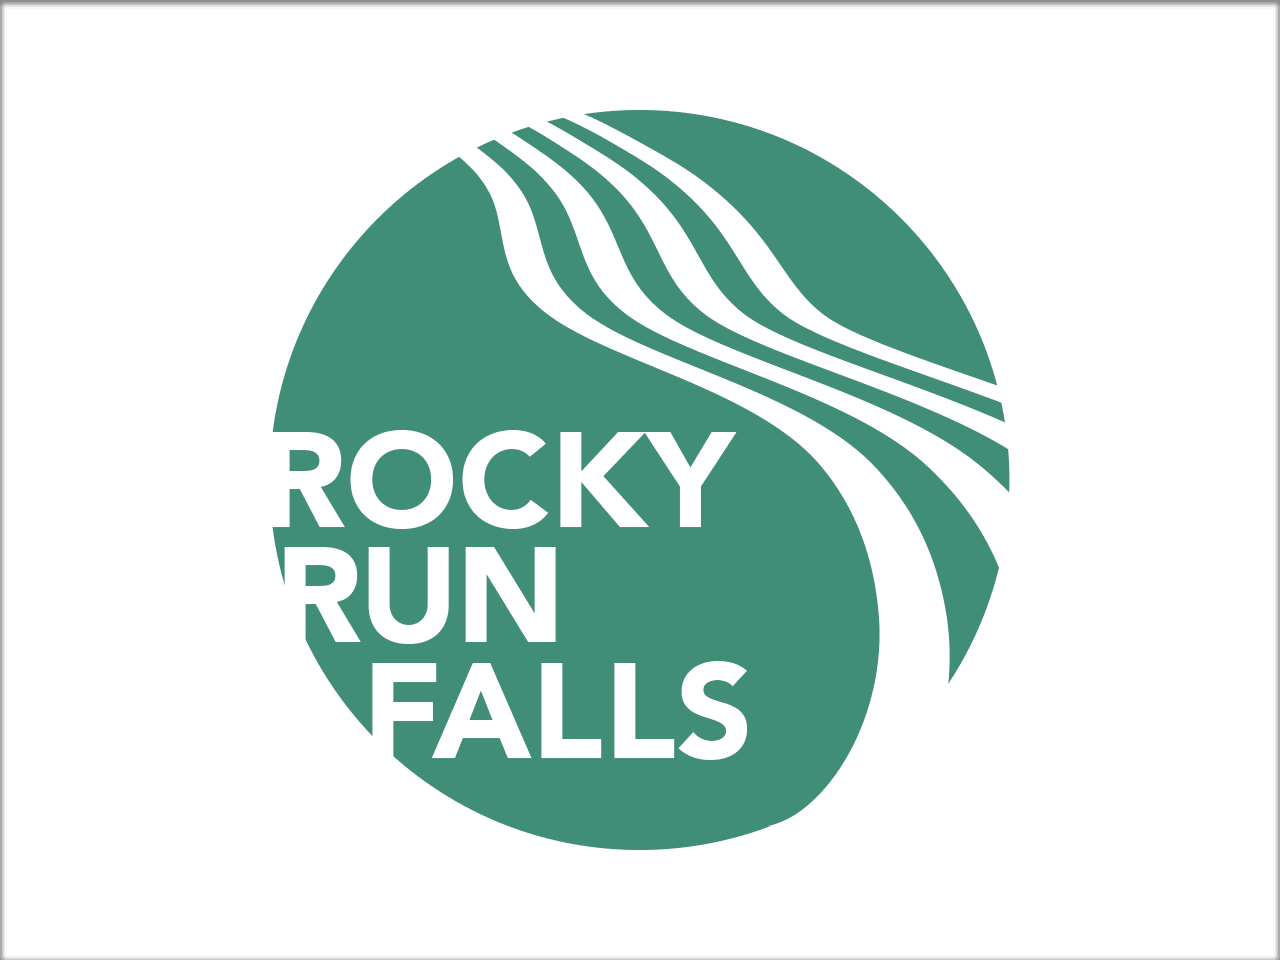 Rocky Run Falls logo